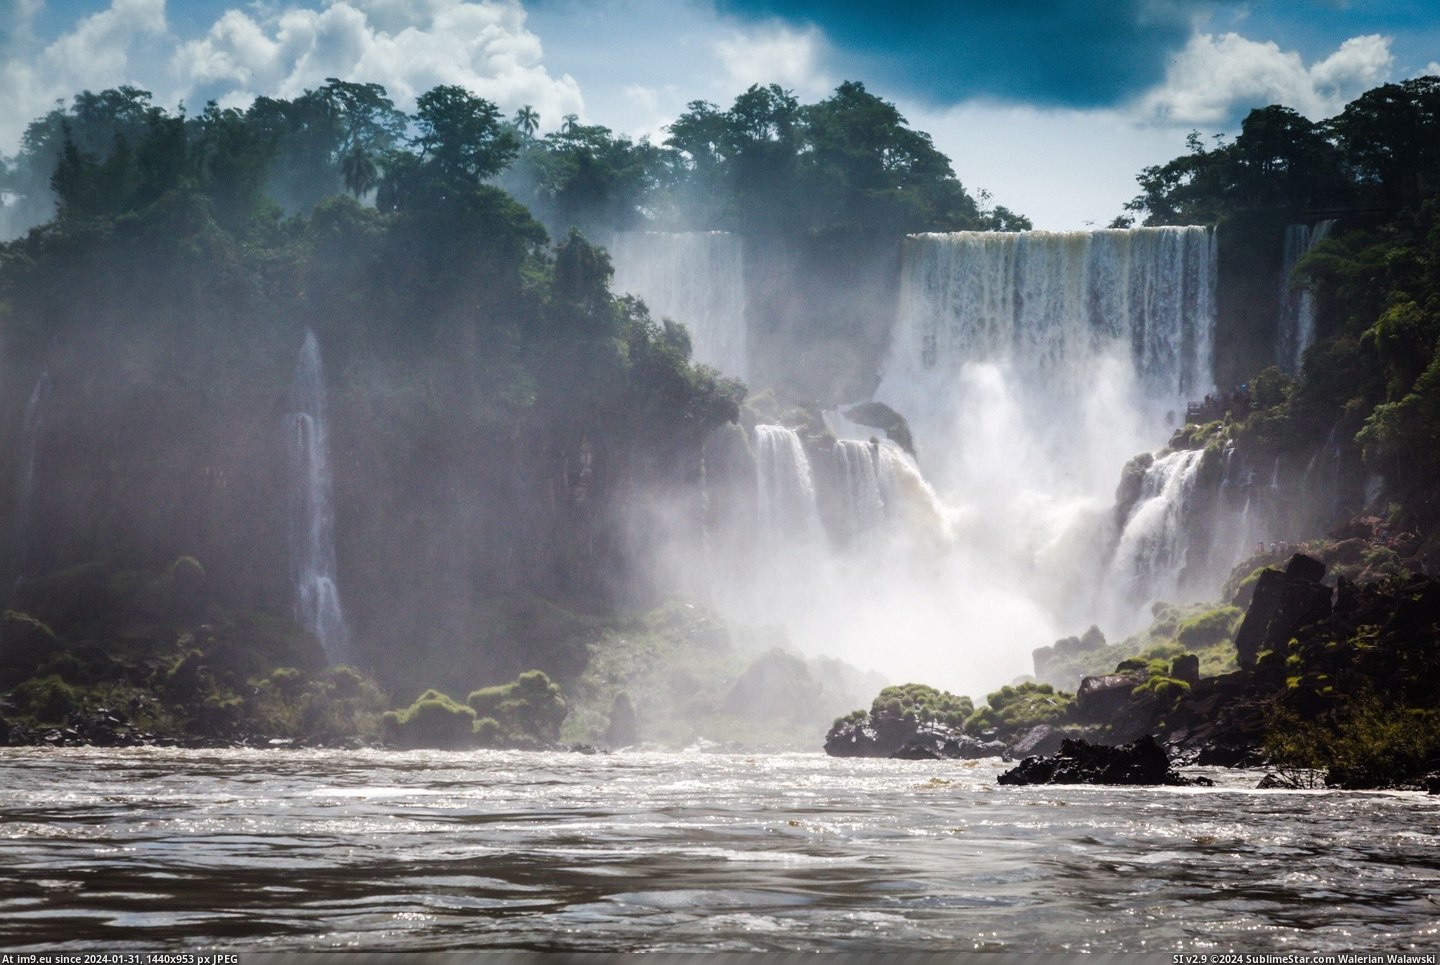 #Falls #Iguazu #Vacation [Earthporn] [OC] Iguazu Falls, taken by me, zenryhao, on vacation. [3204 x 1506] Pic. (Obraz z album My r/EARTHPORN favs))